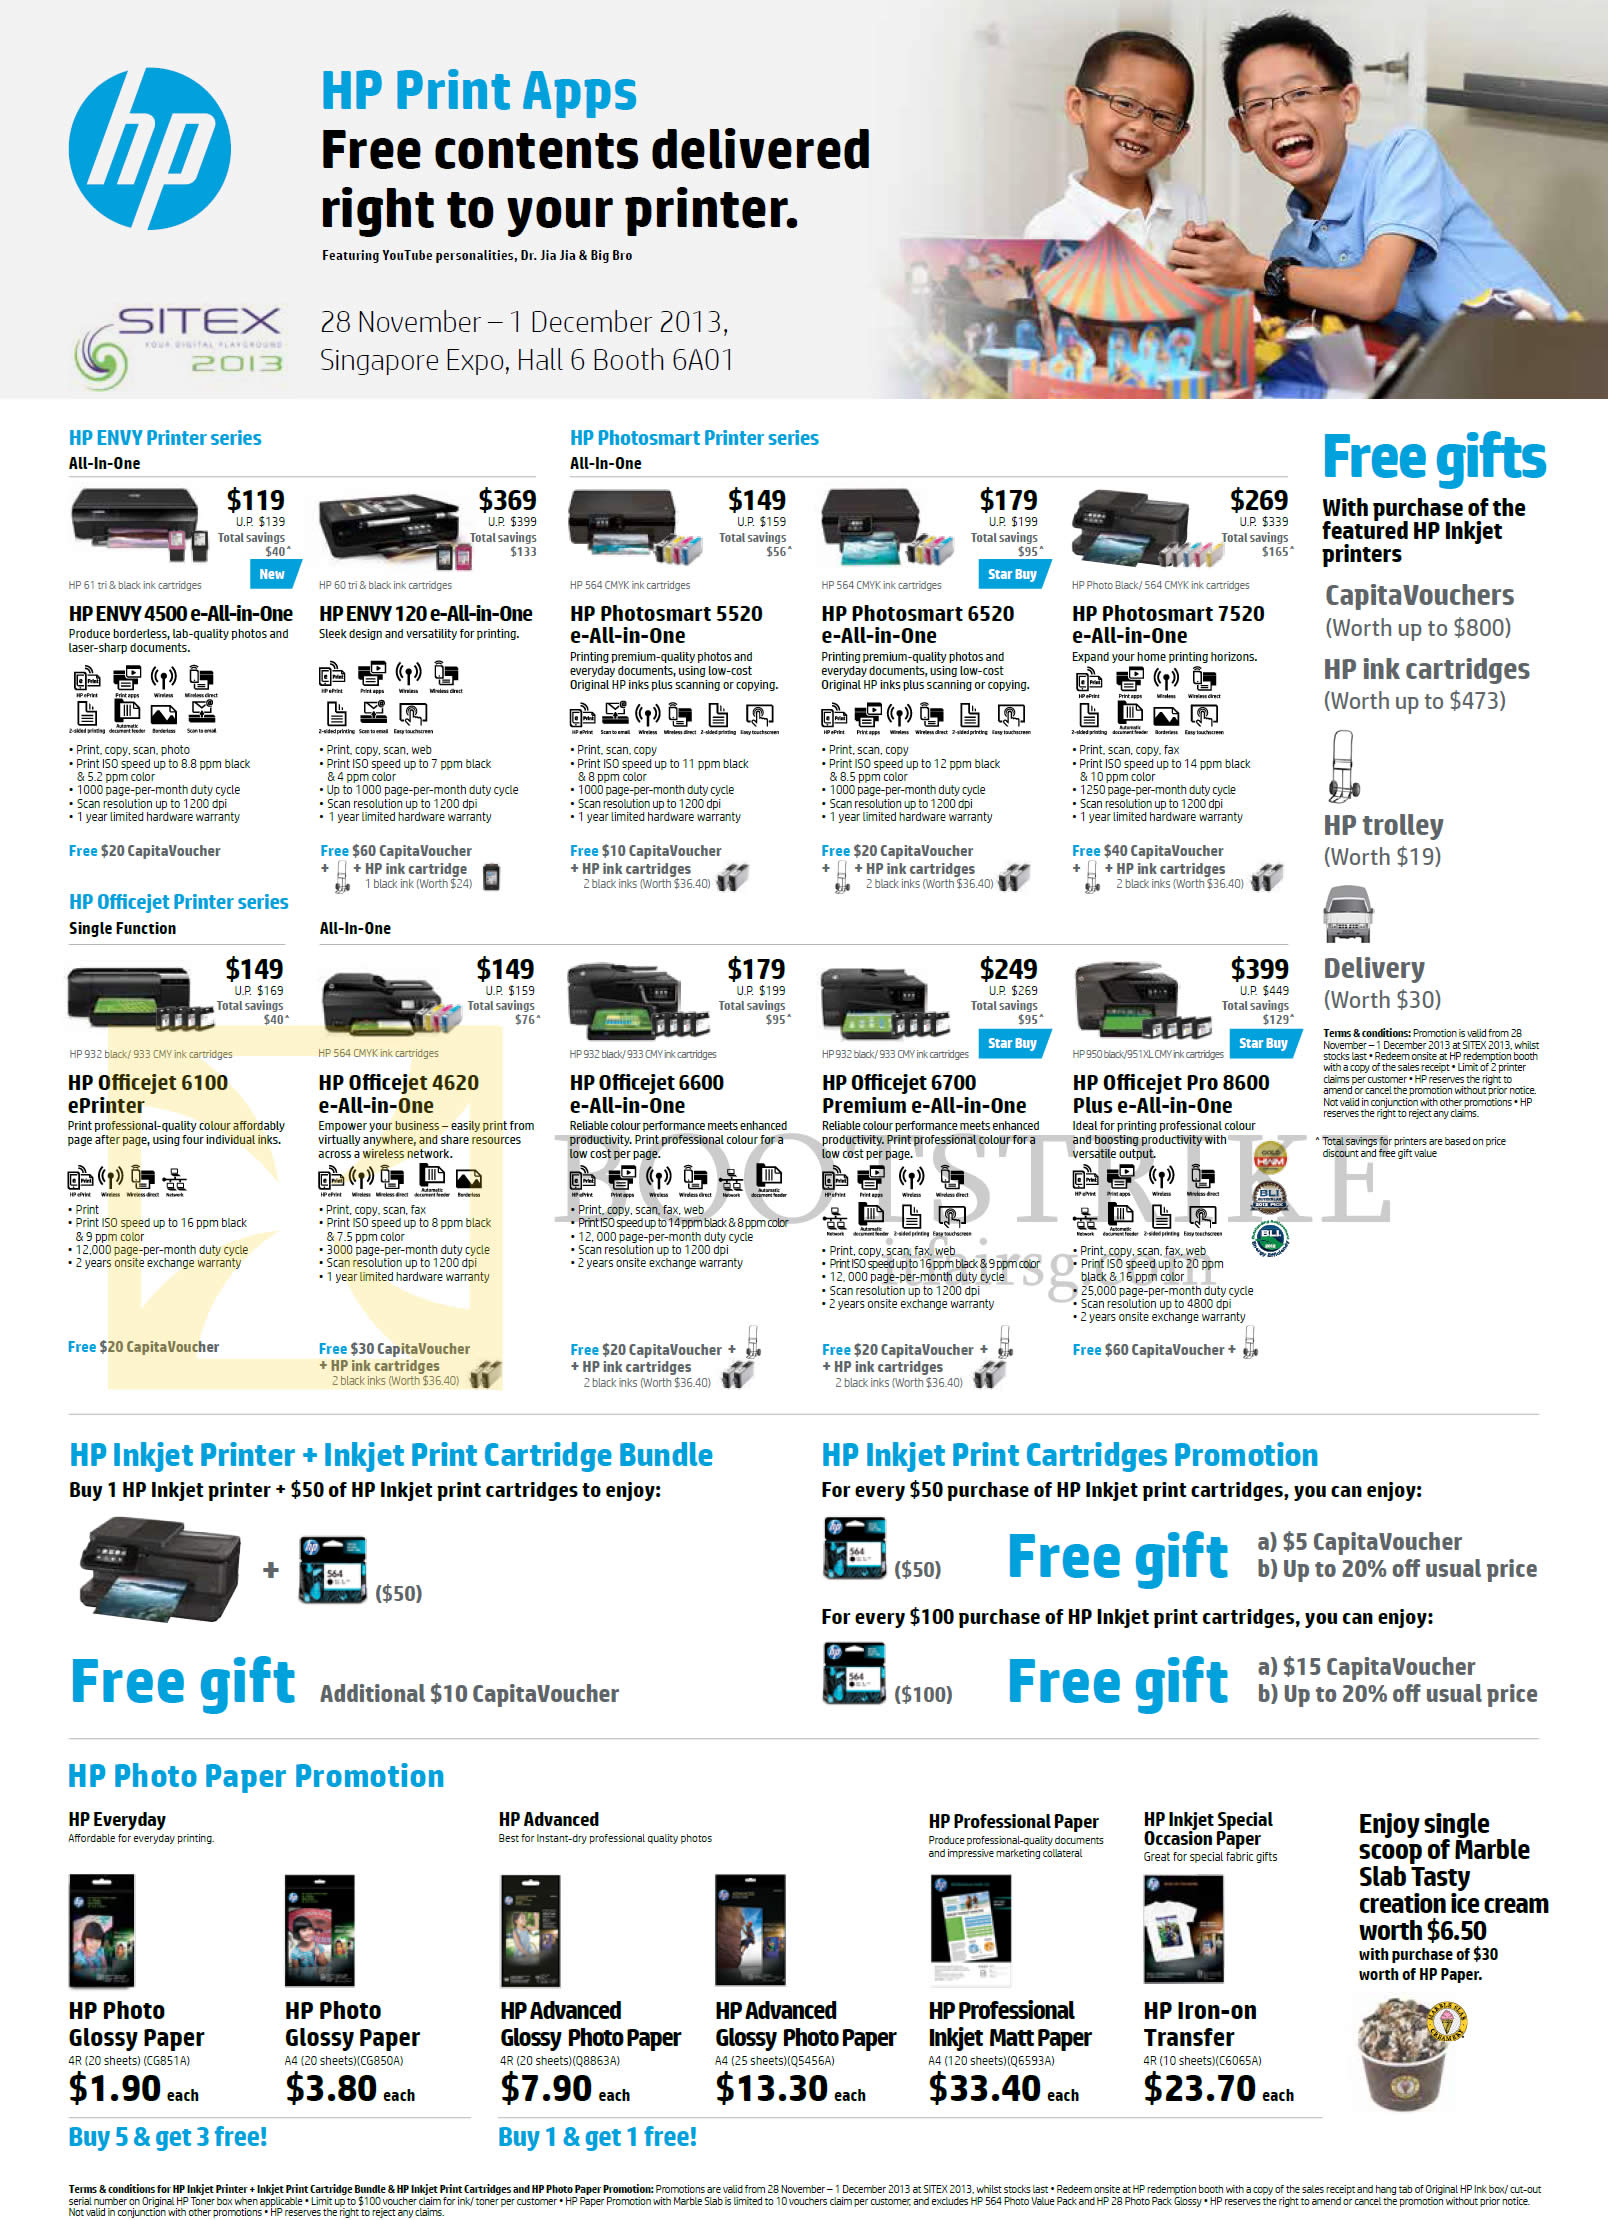 SITEX 2013 price list image brochure of HP Printers Envy, Photo Paper, Envy 4500, 120, Photosmart 6520, 5520, 7520, Officejet 6100, 4620, 6600, 6700, 8600